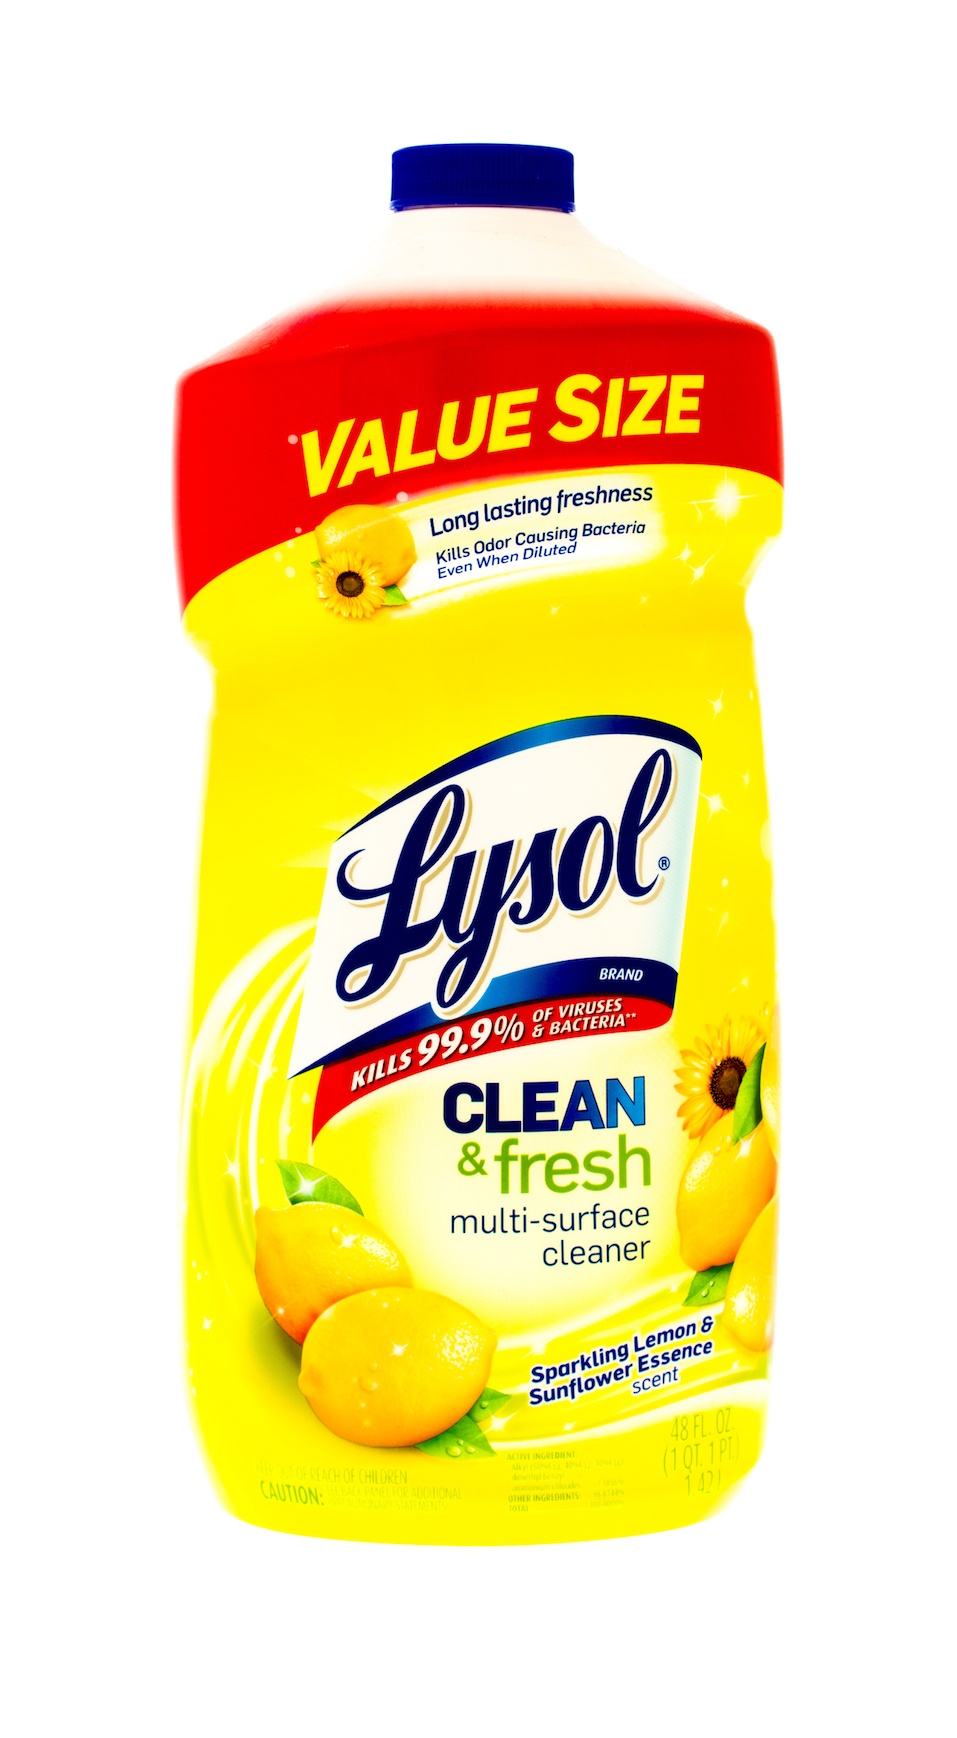 Bottle of Lysol clean & fresh cleaner.